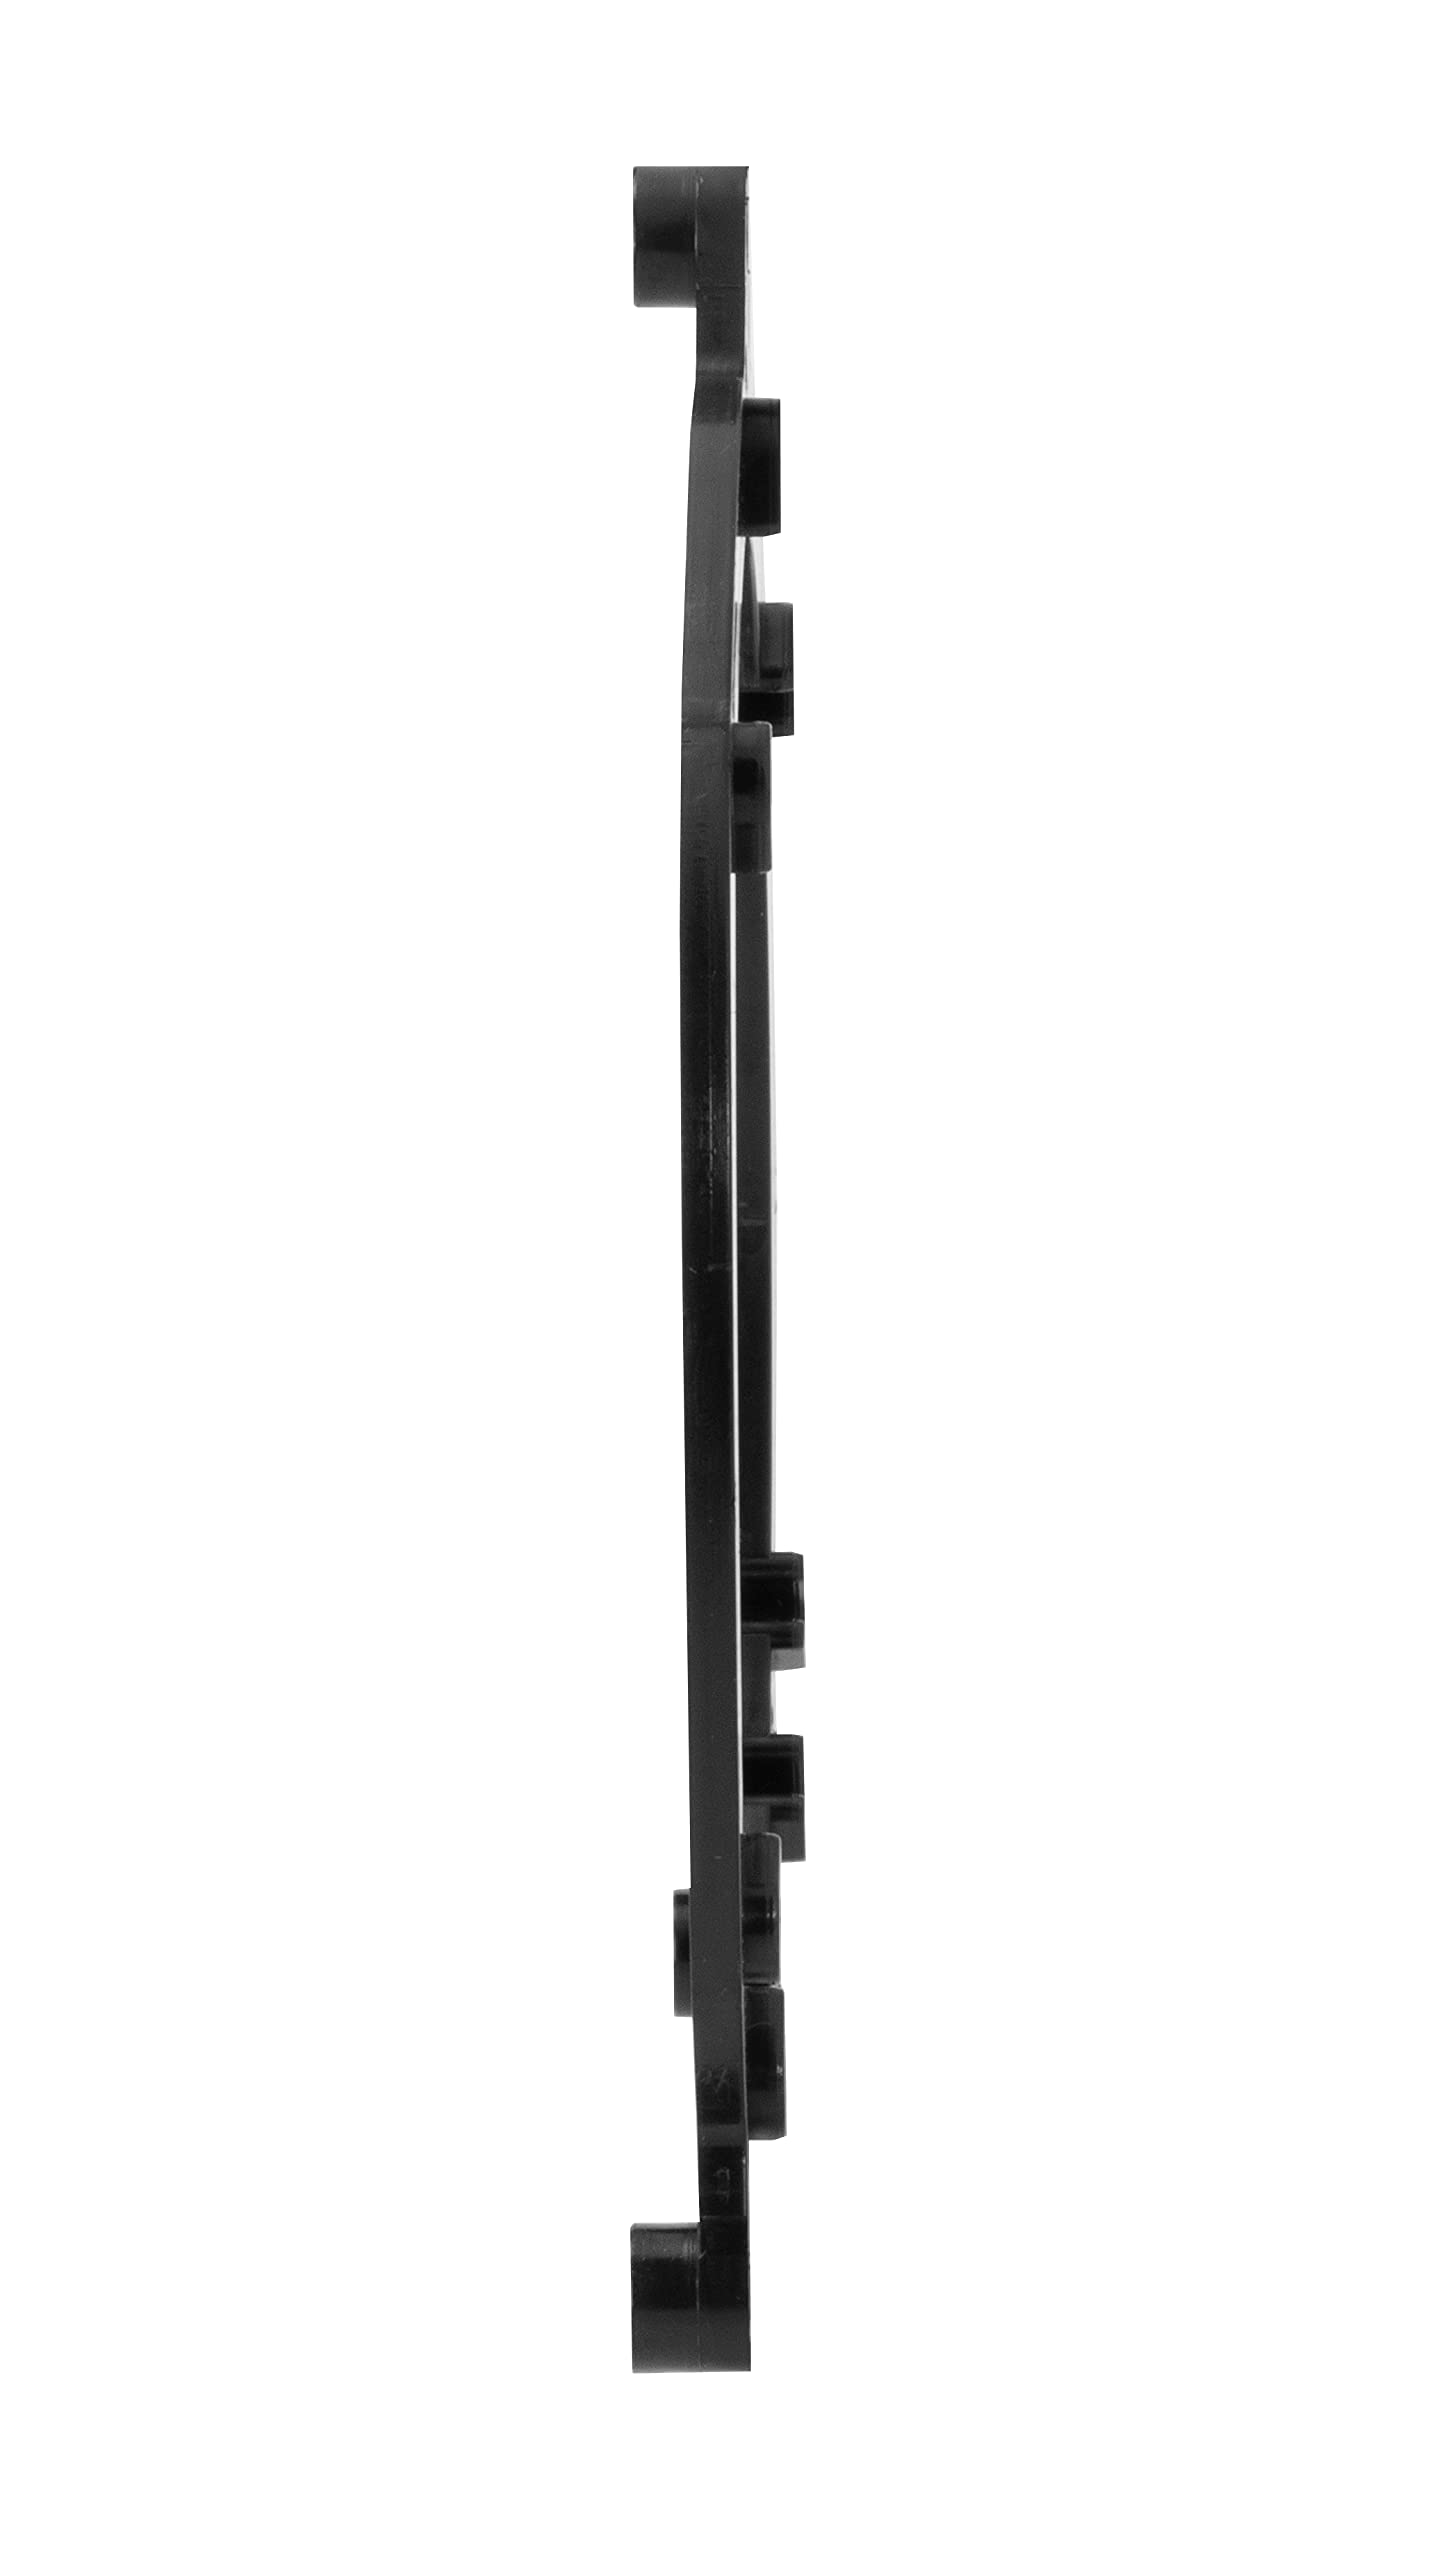 Scosche 1999 to 2010 BMW 3-Series 5.25” Speaker Adapter for Front Doors (1 Pair) SABW525, black